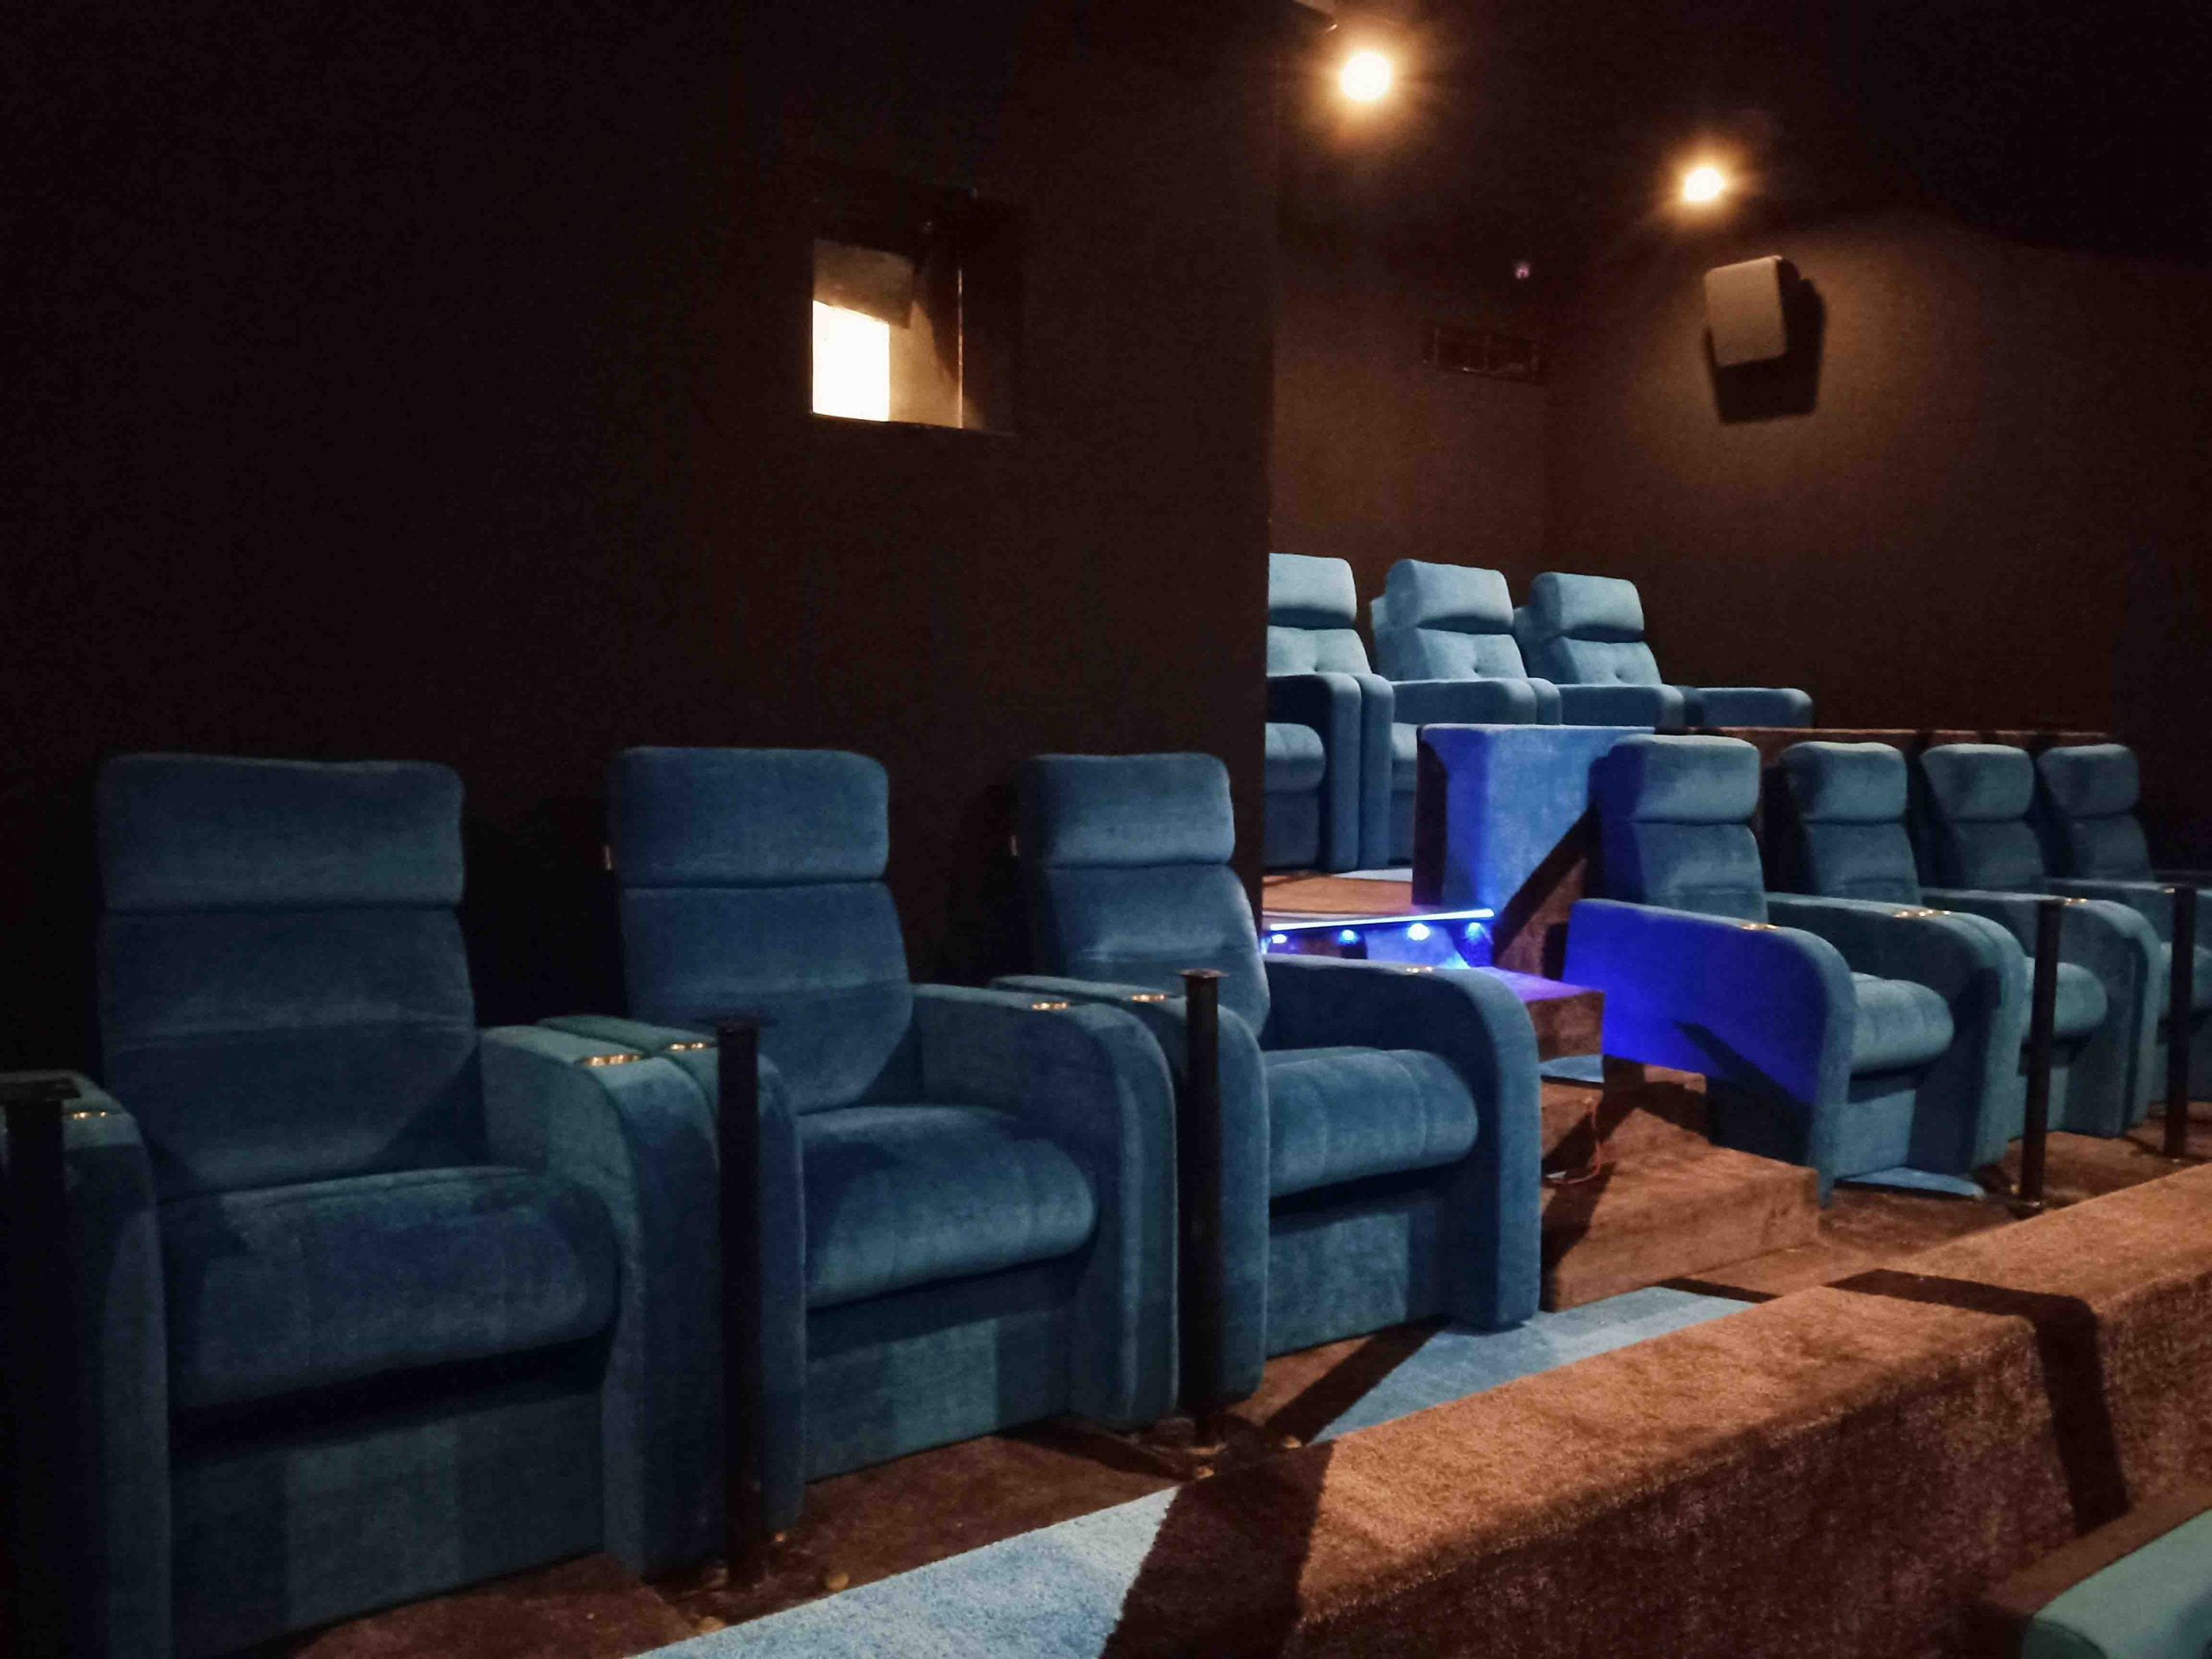 Cinema Slider installed at Fortune Cinemas Indore